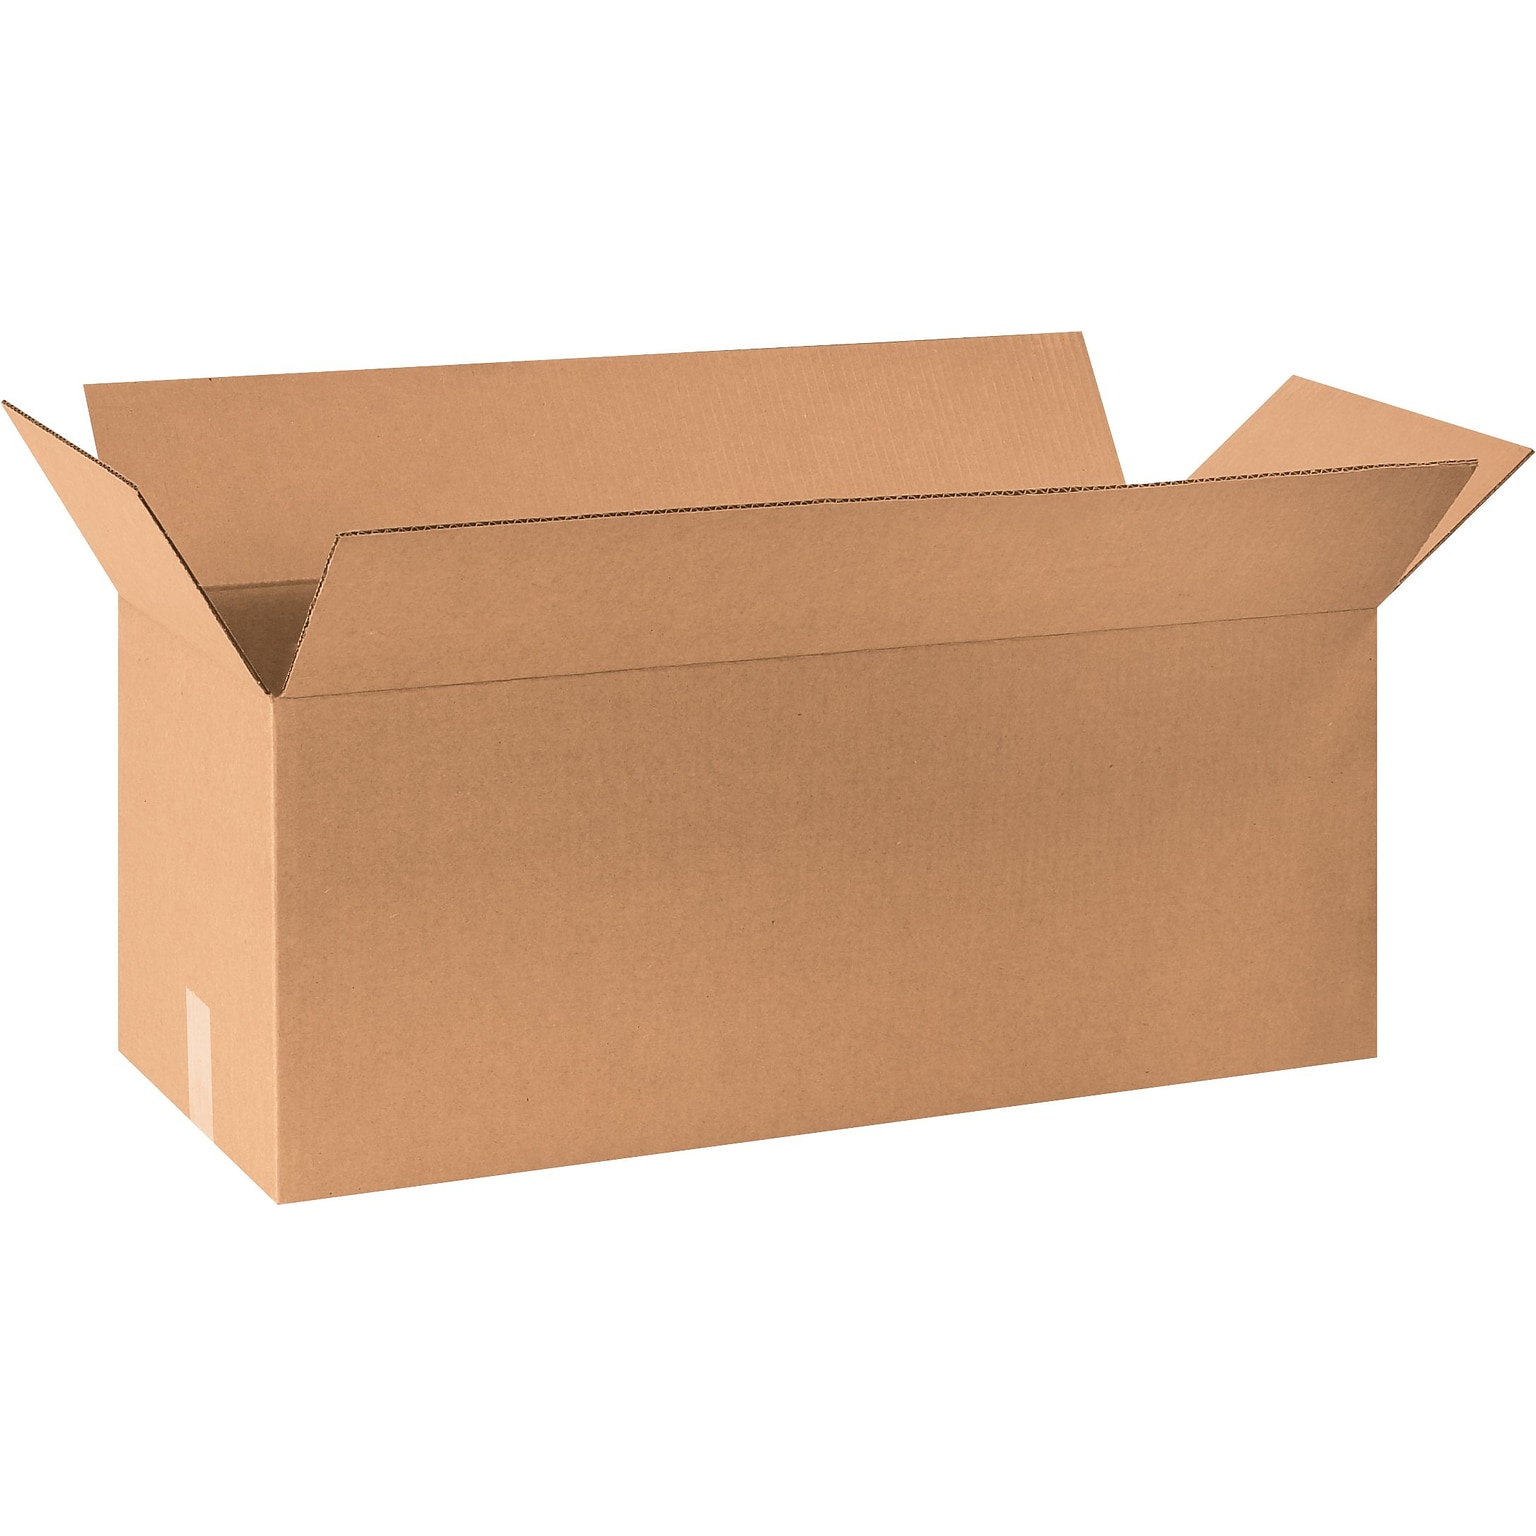 30 x 10 x 10 Shipping Boxes, 32 ECT, Brown, 20/Bundle (301010)